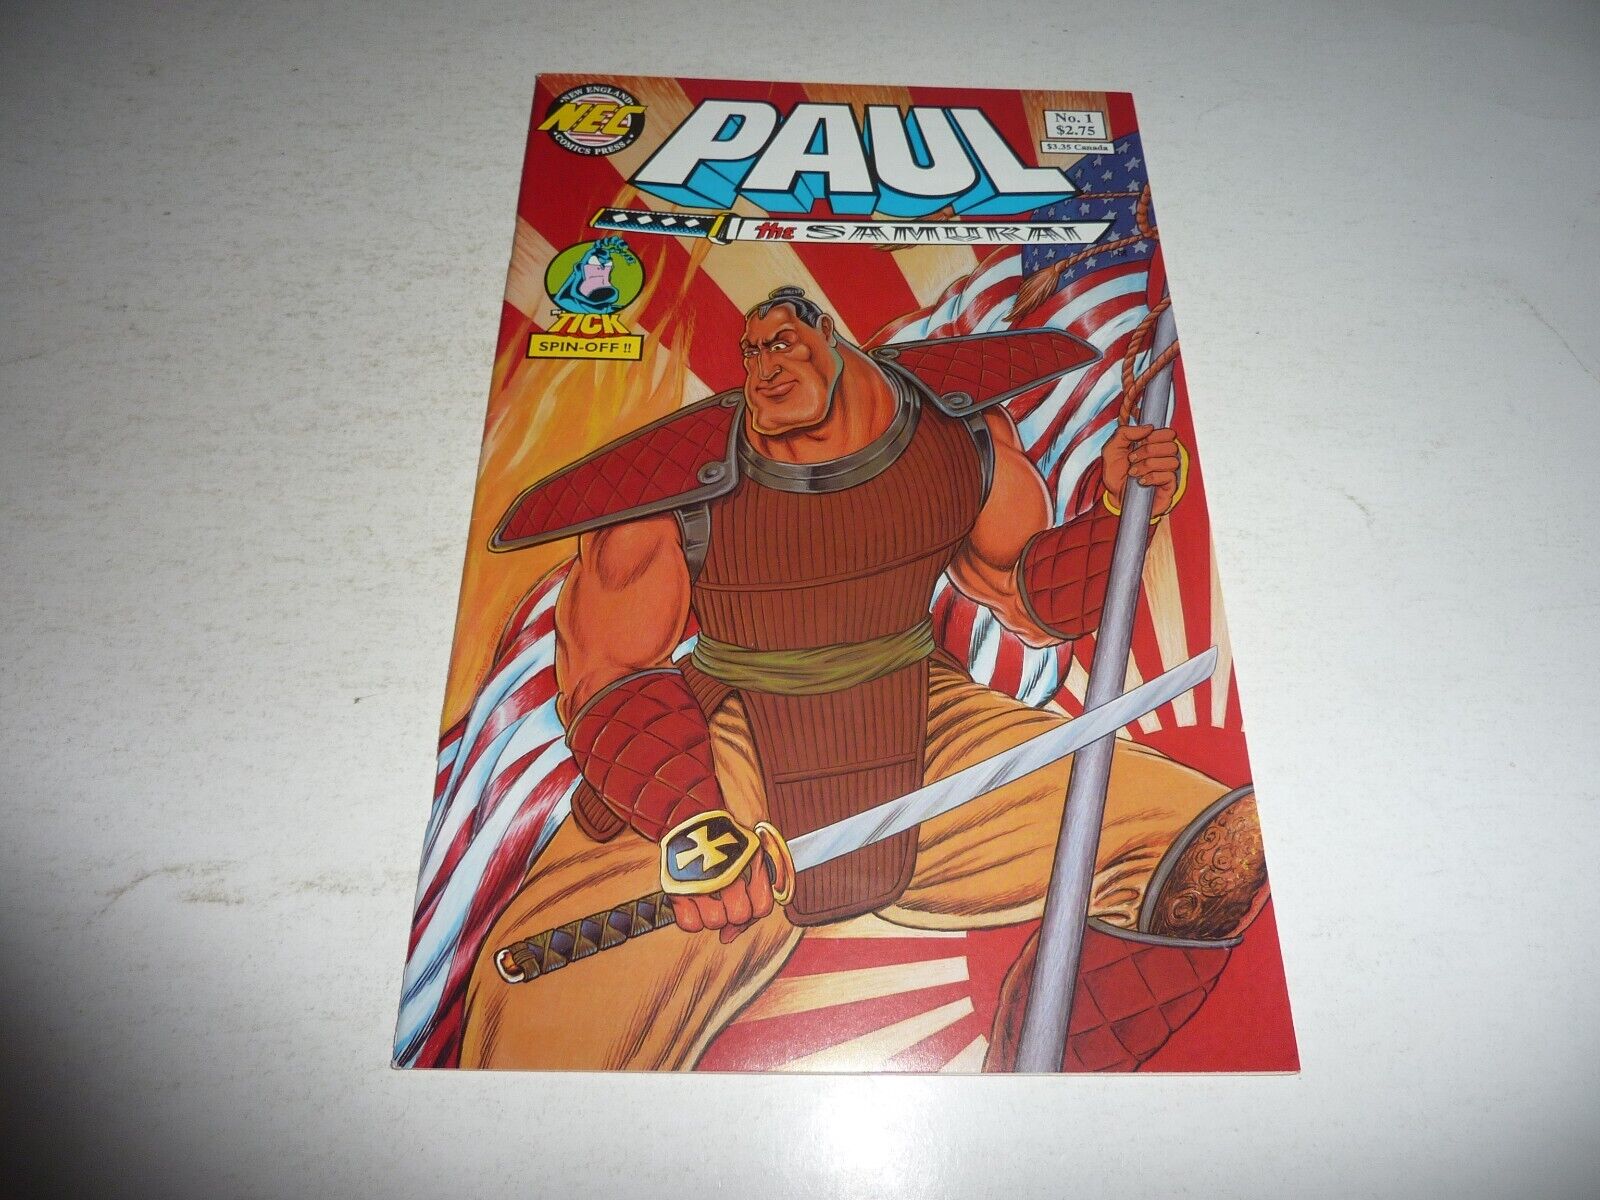 PAUL THE SAMURAI #1 NEC New England Comics 1992 TICK Spin Off NM- 9.2